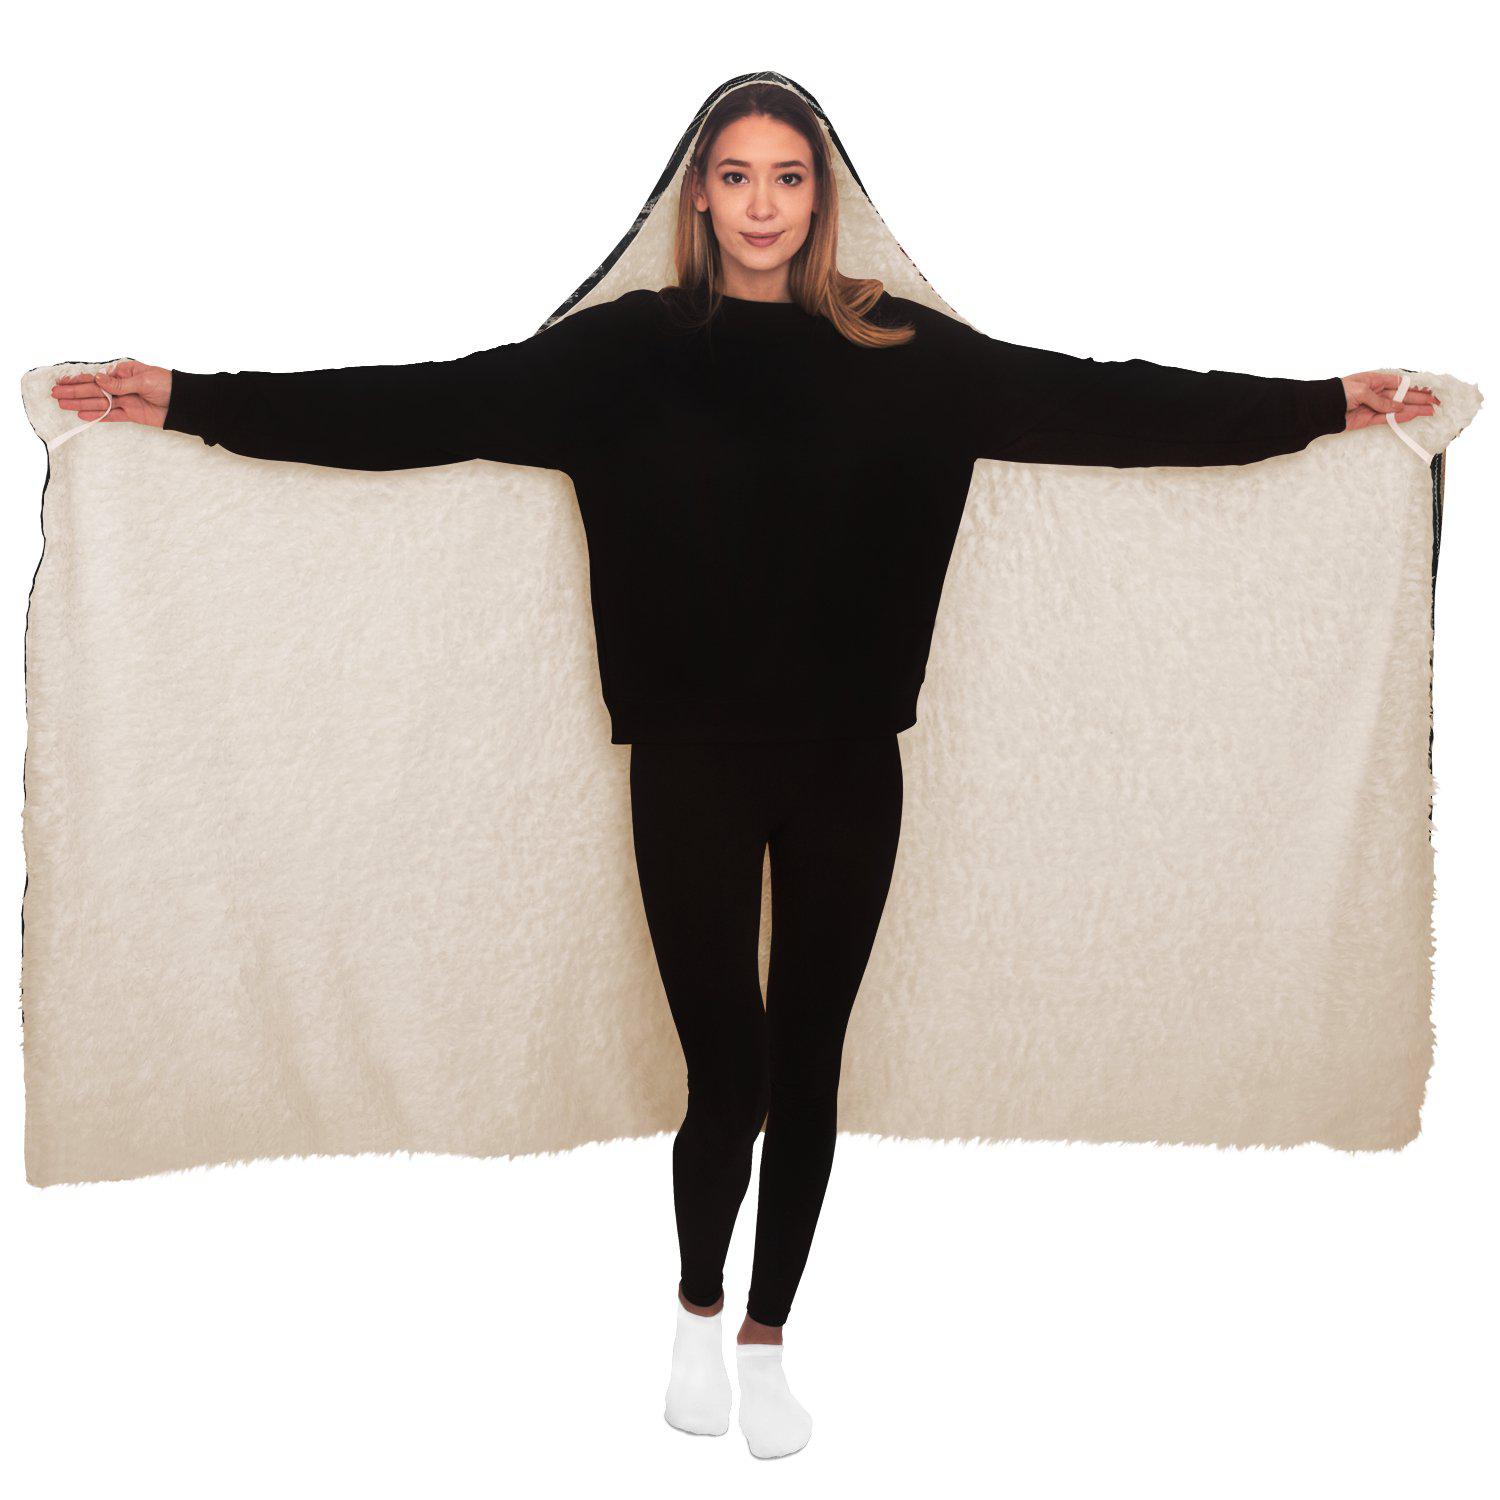 Hooded Blanket - AOP Adult / Premium Sherpa Hooded Blanket, Li Culture Traditional Textile Design